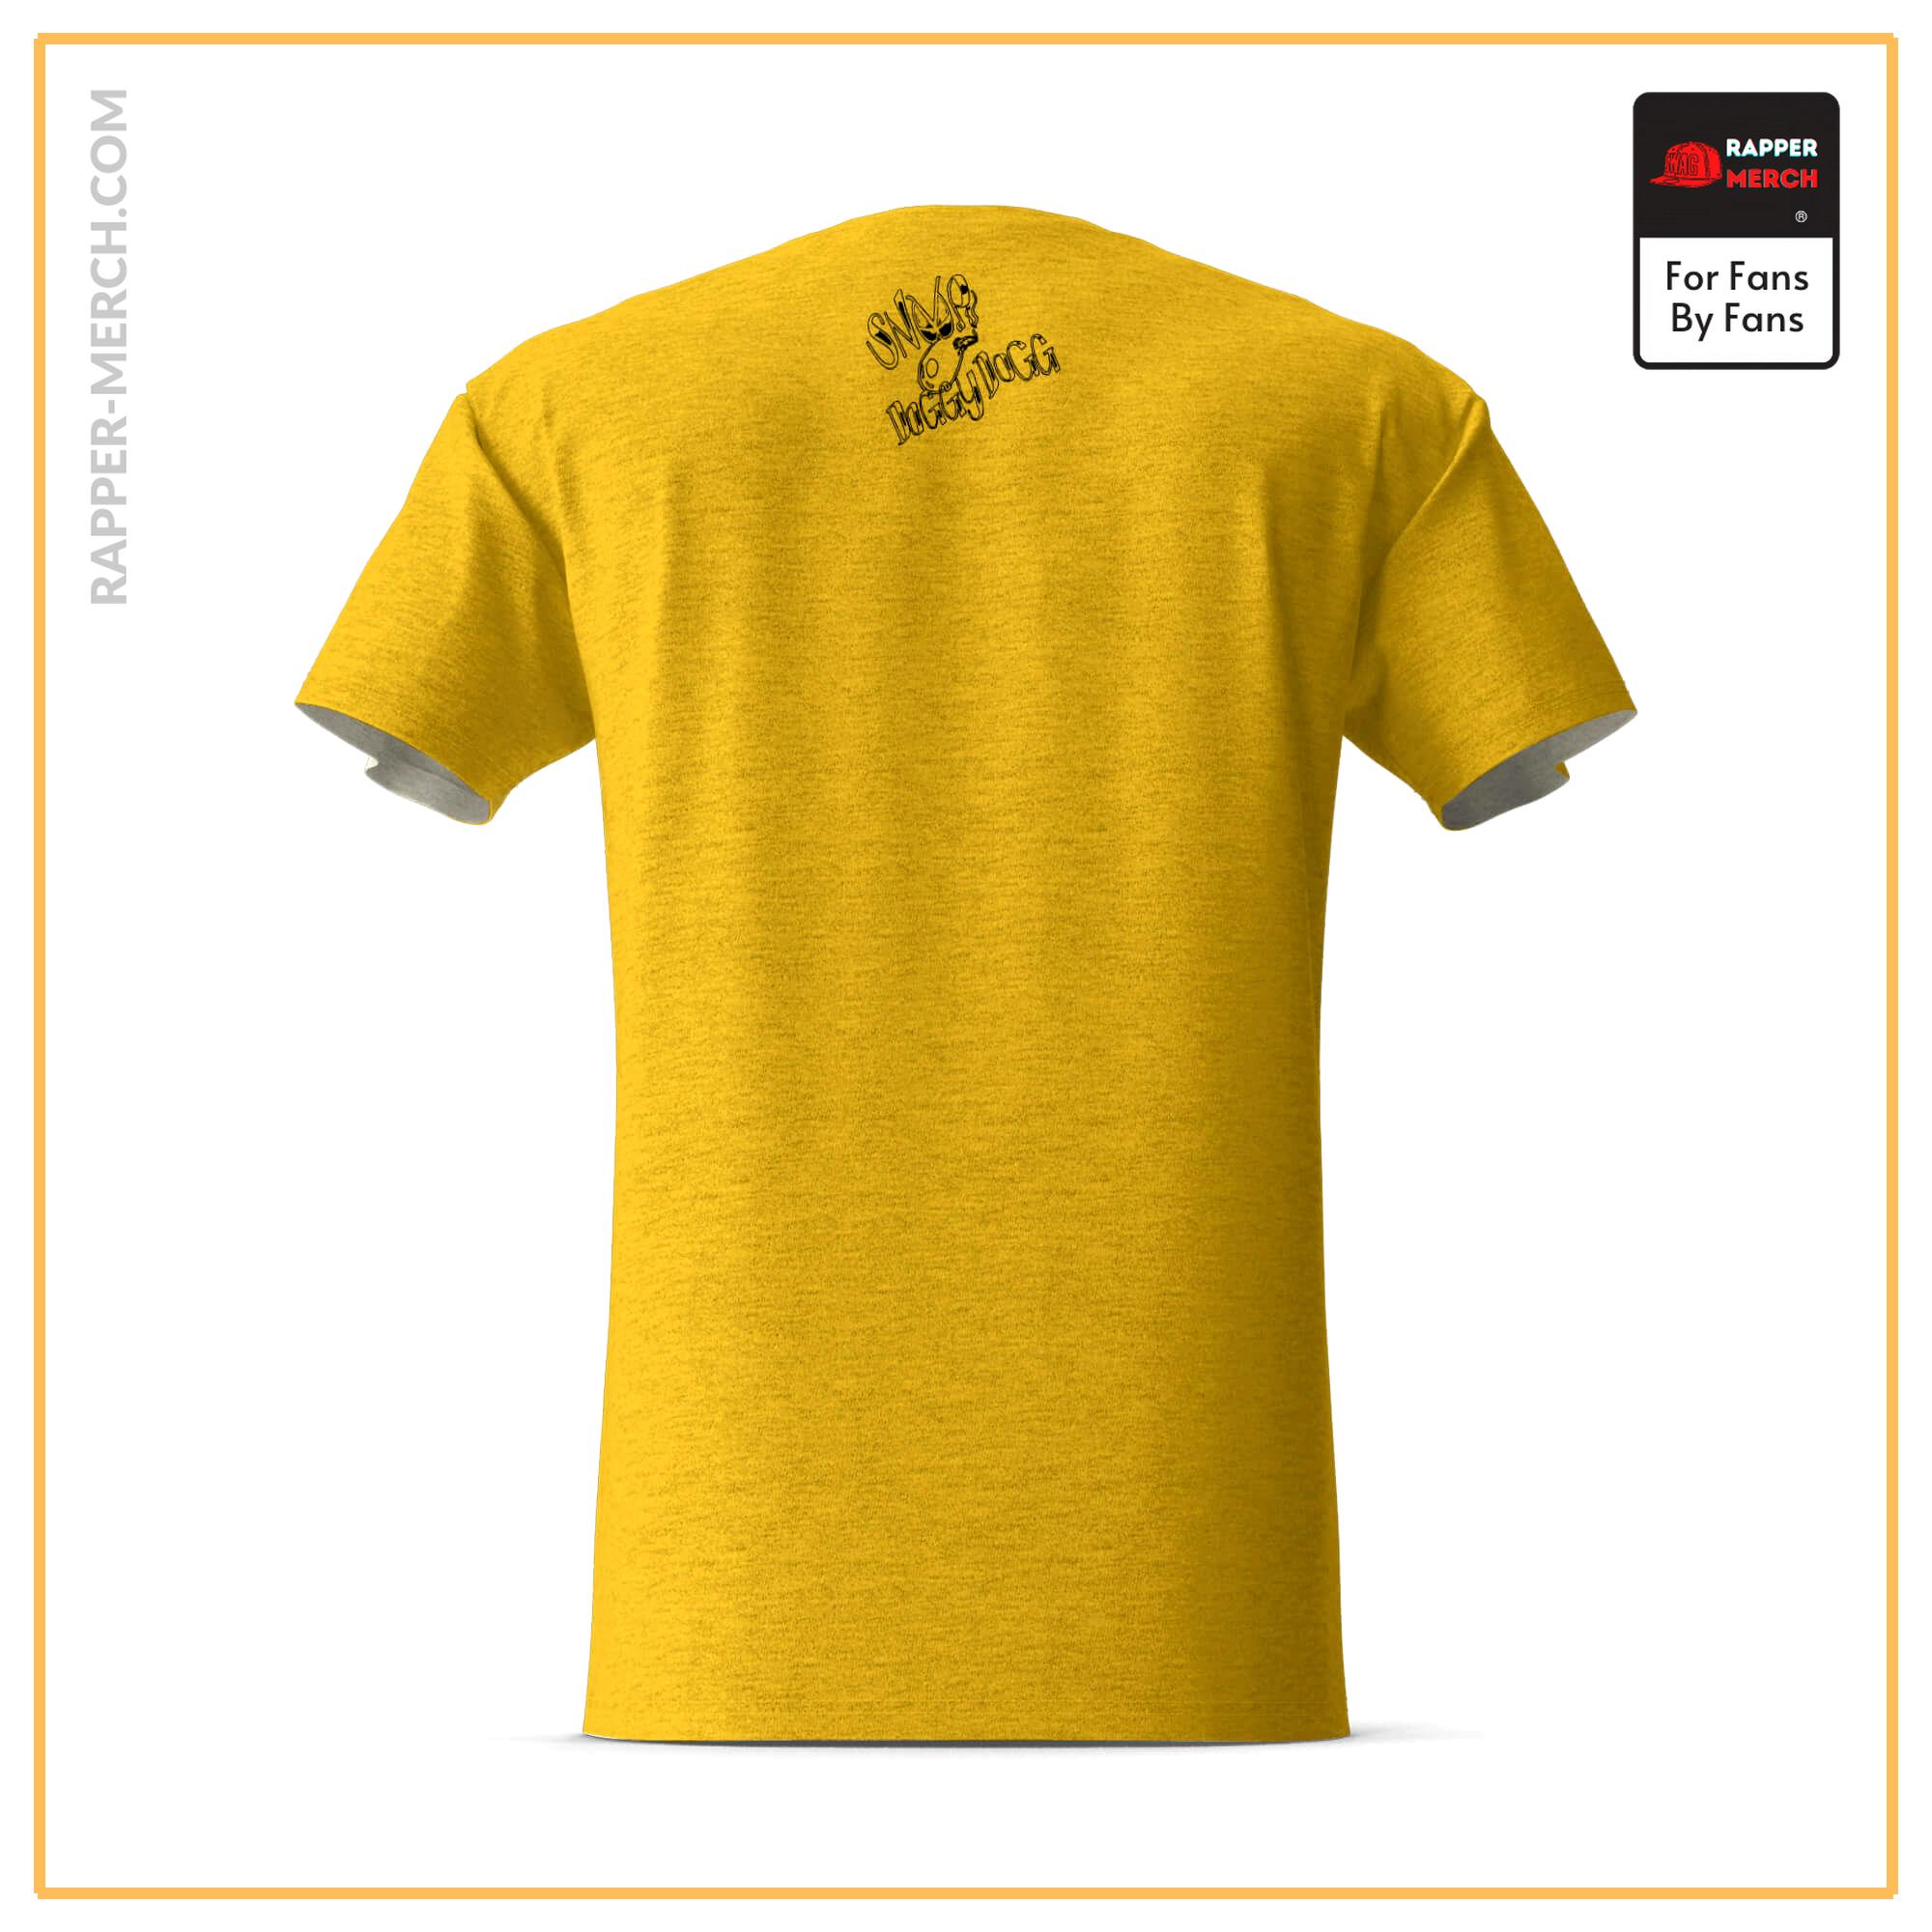 Doggystyle Yellow Album Art Snoop Dogg Shirt RM0310